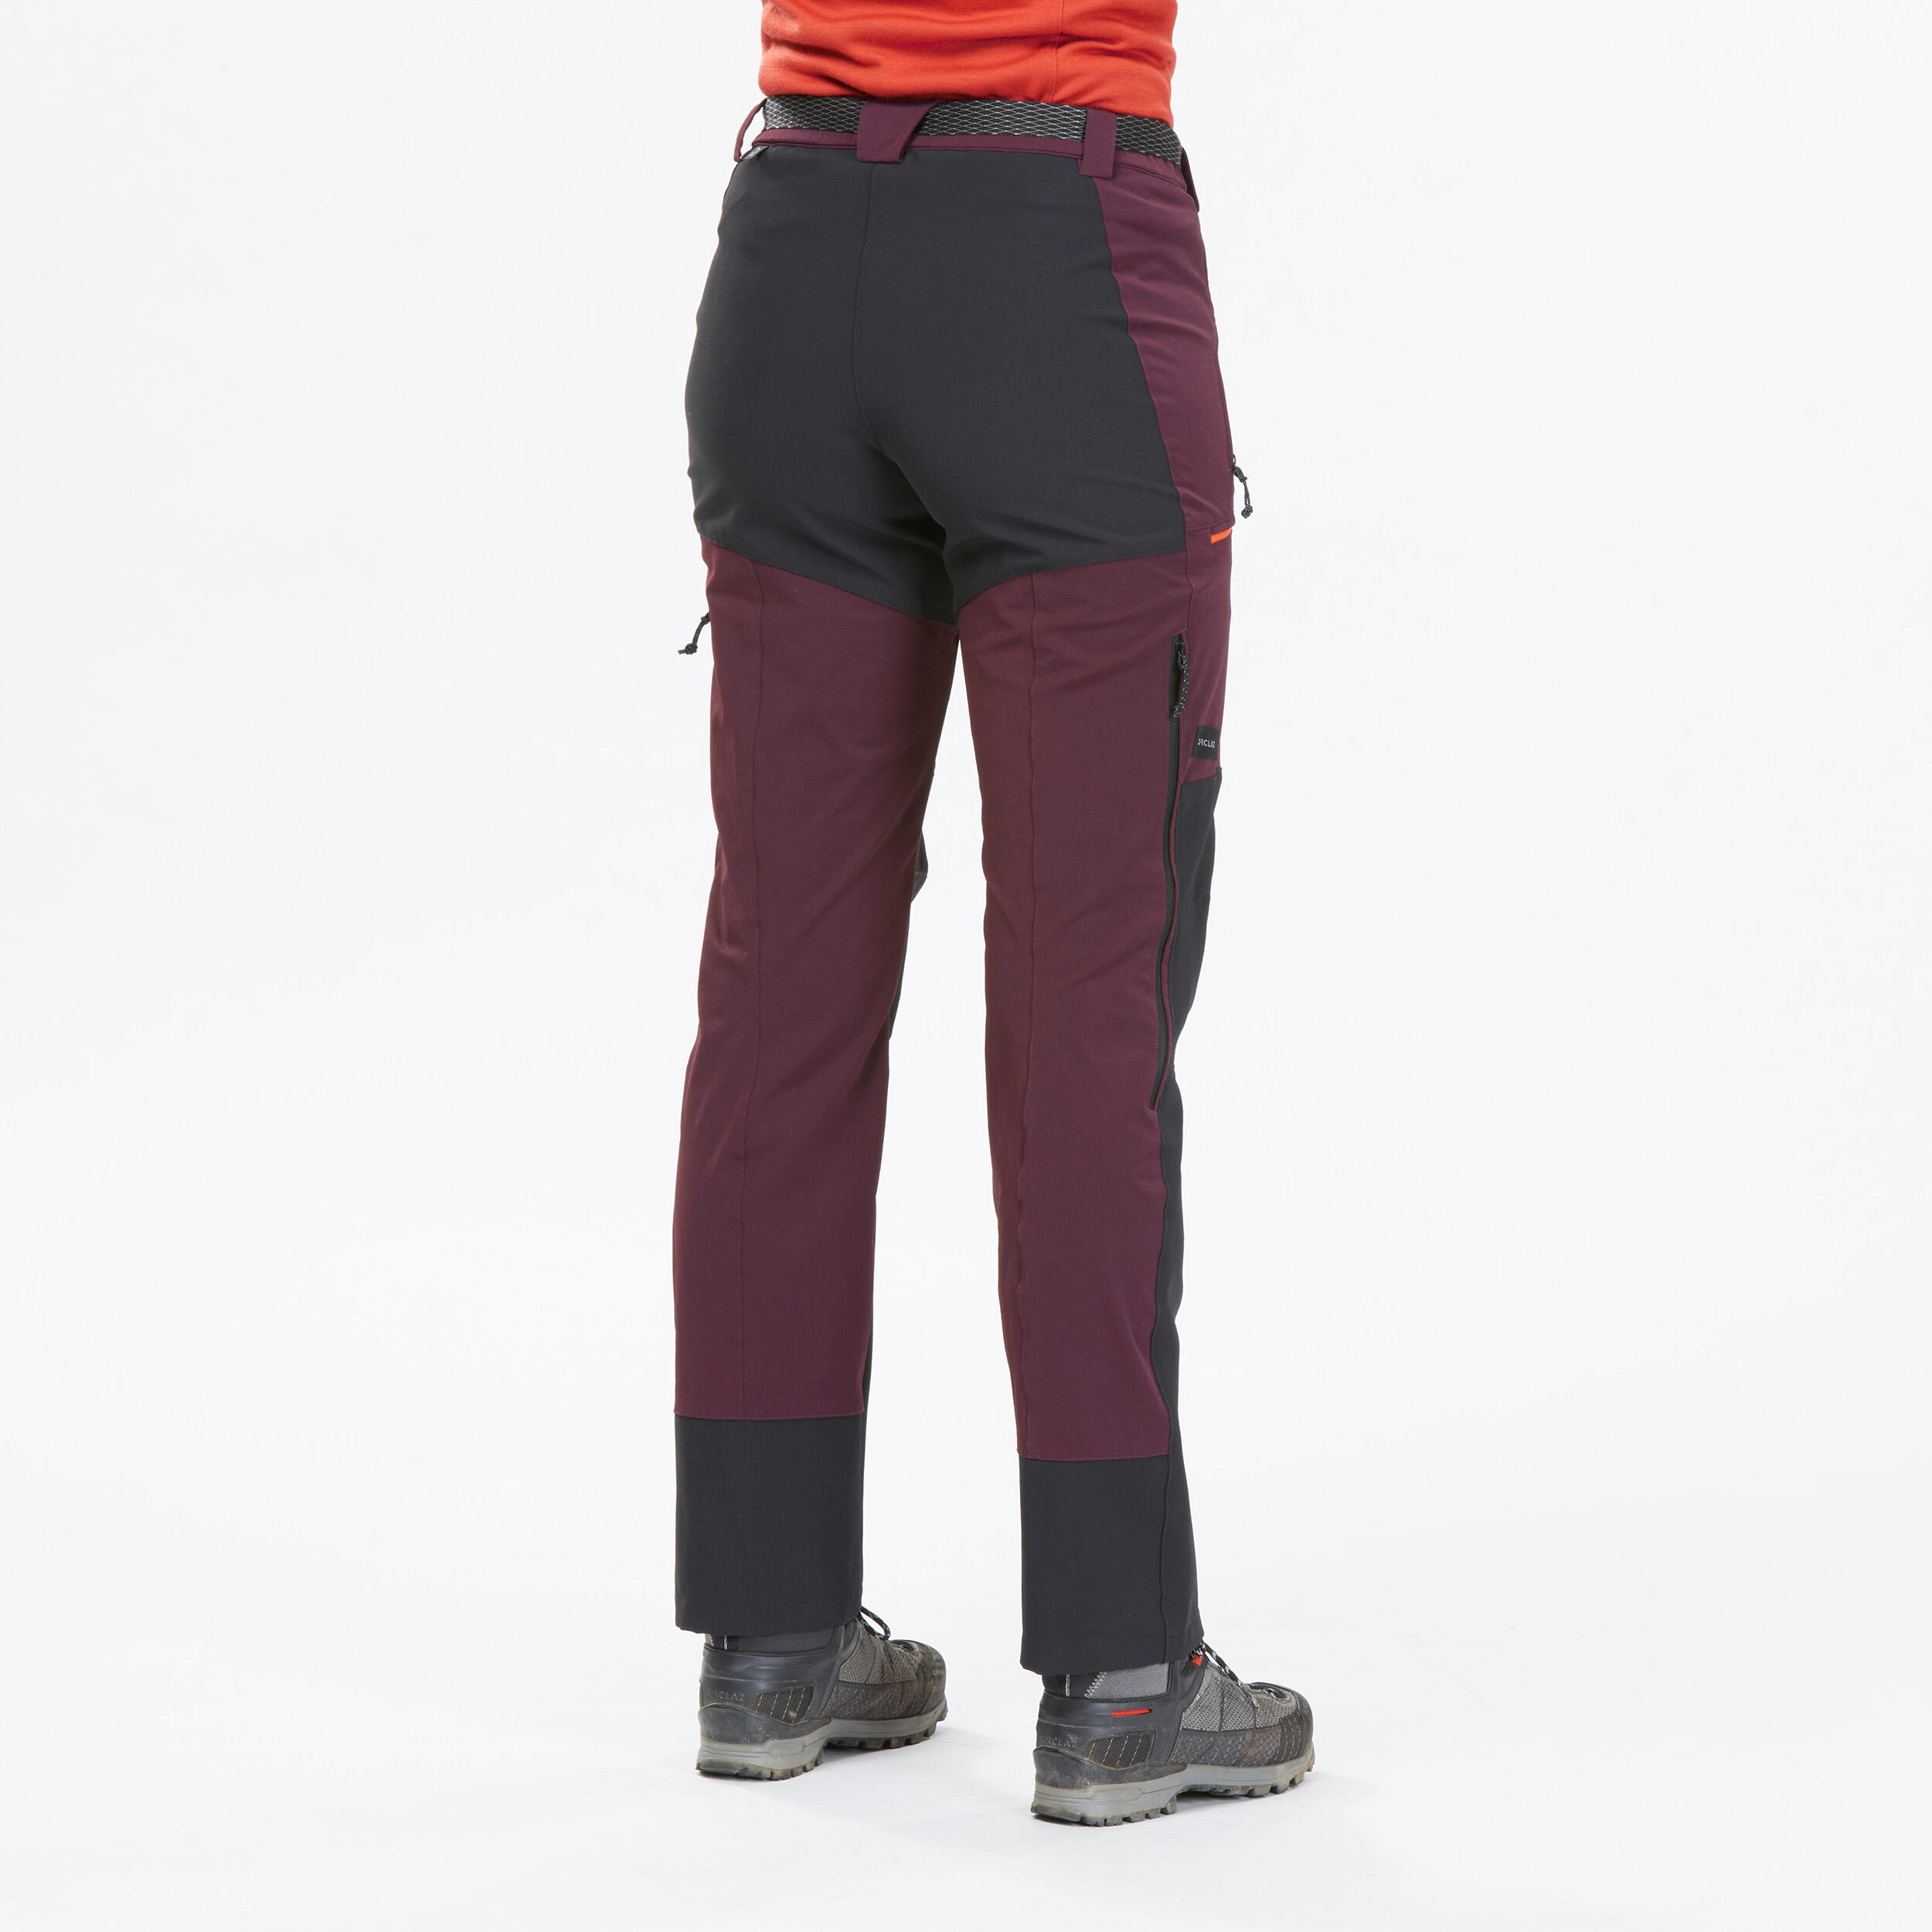 MT 900 hiking pants - Women - FORCLAZ